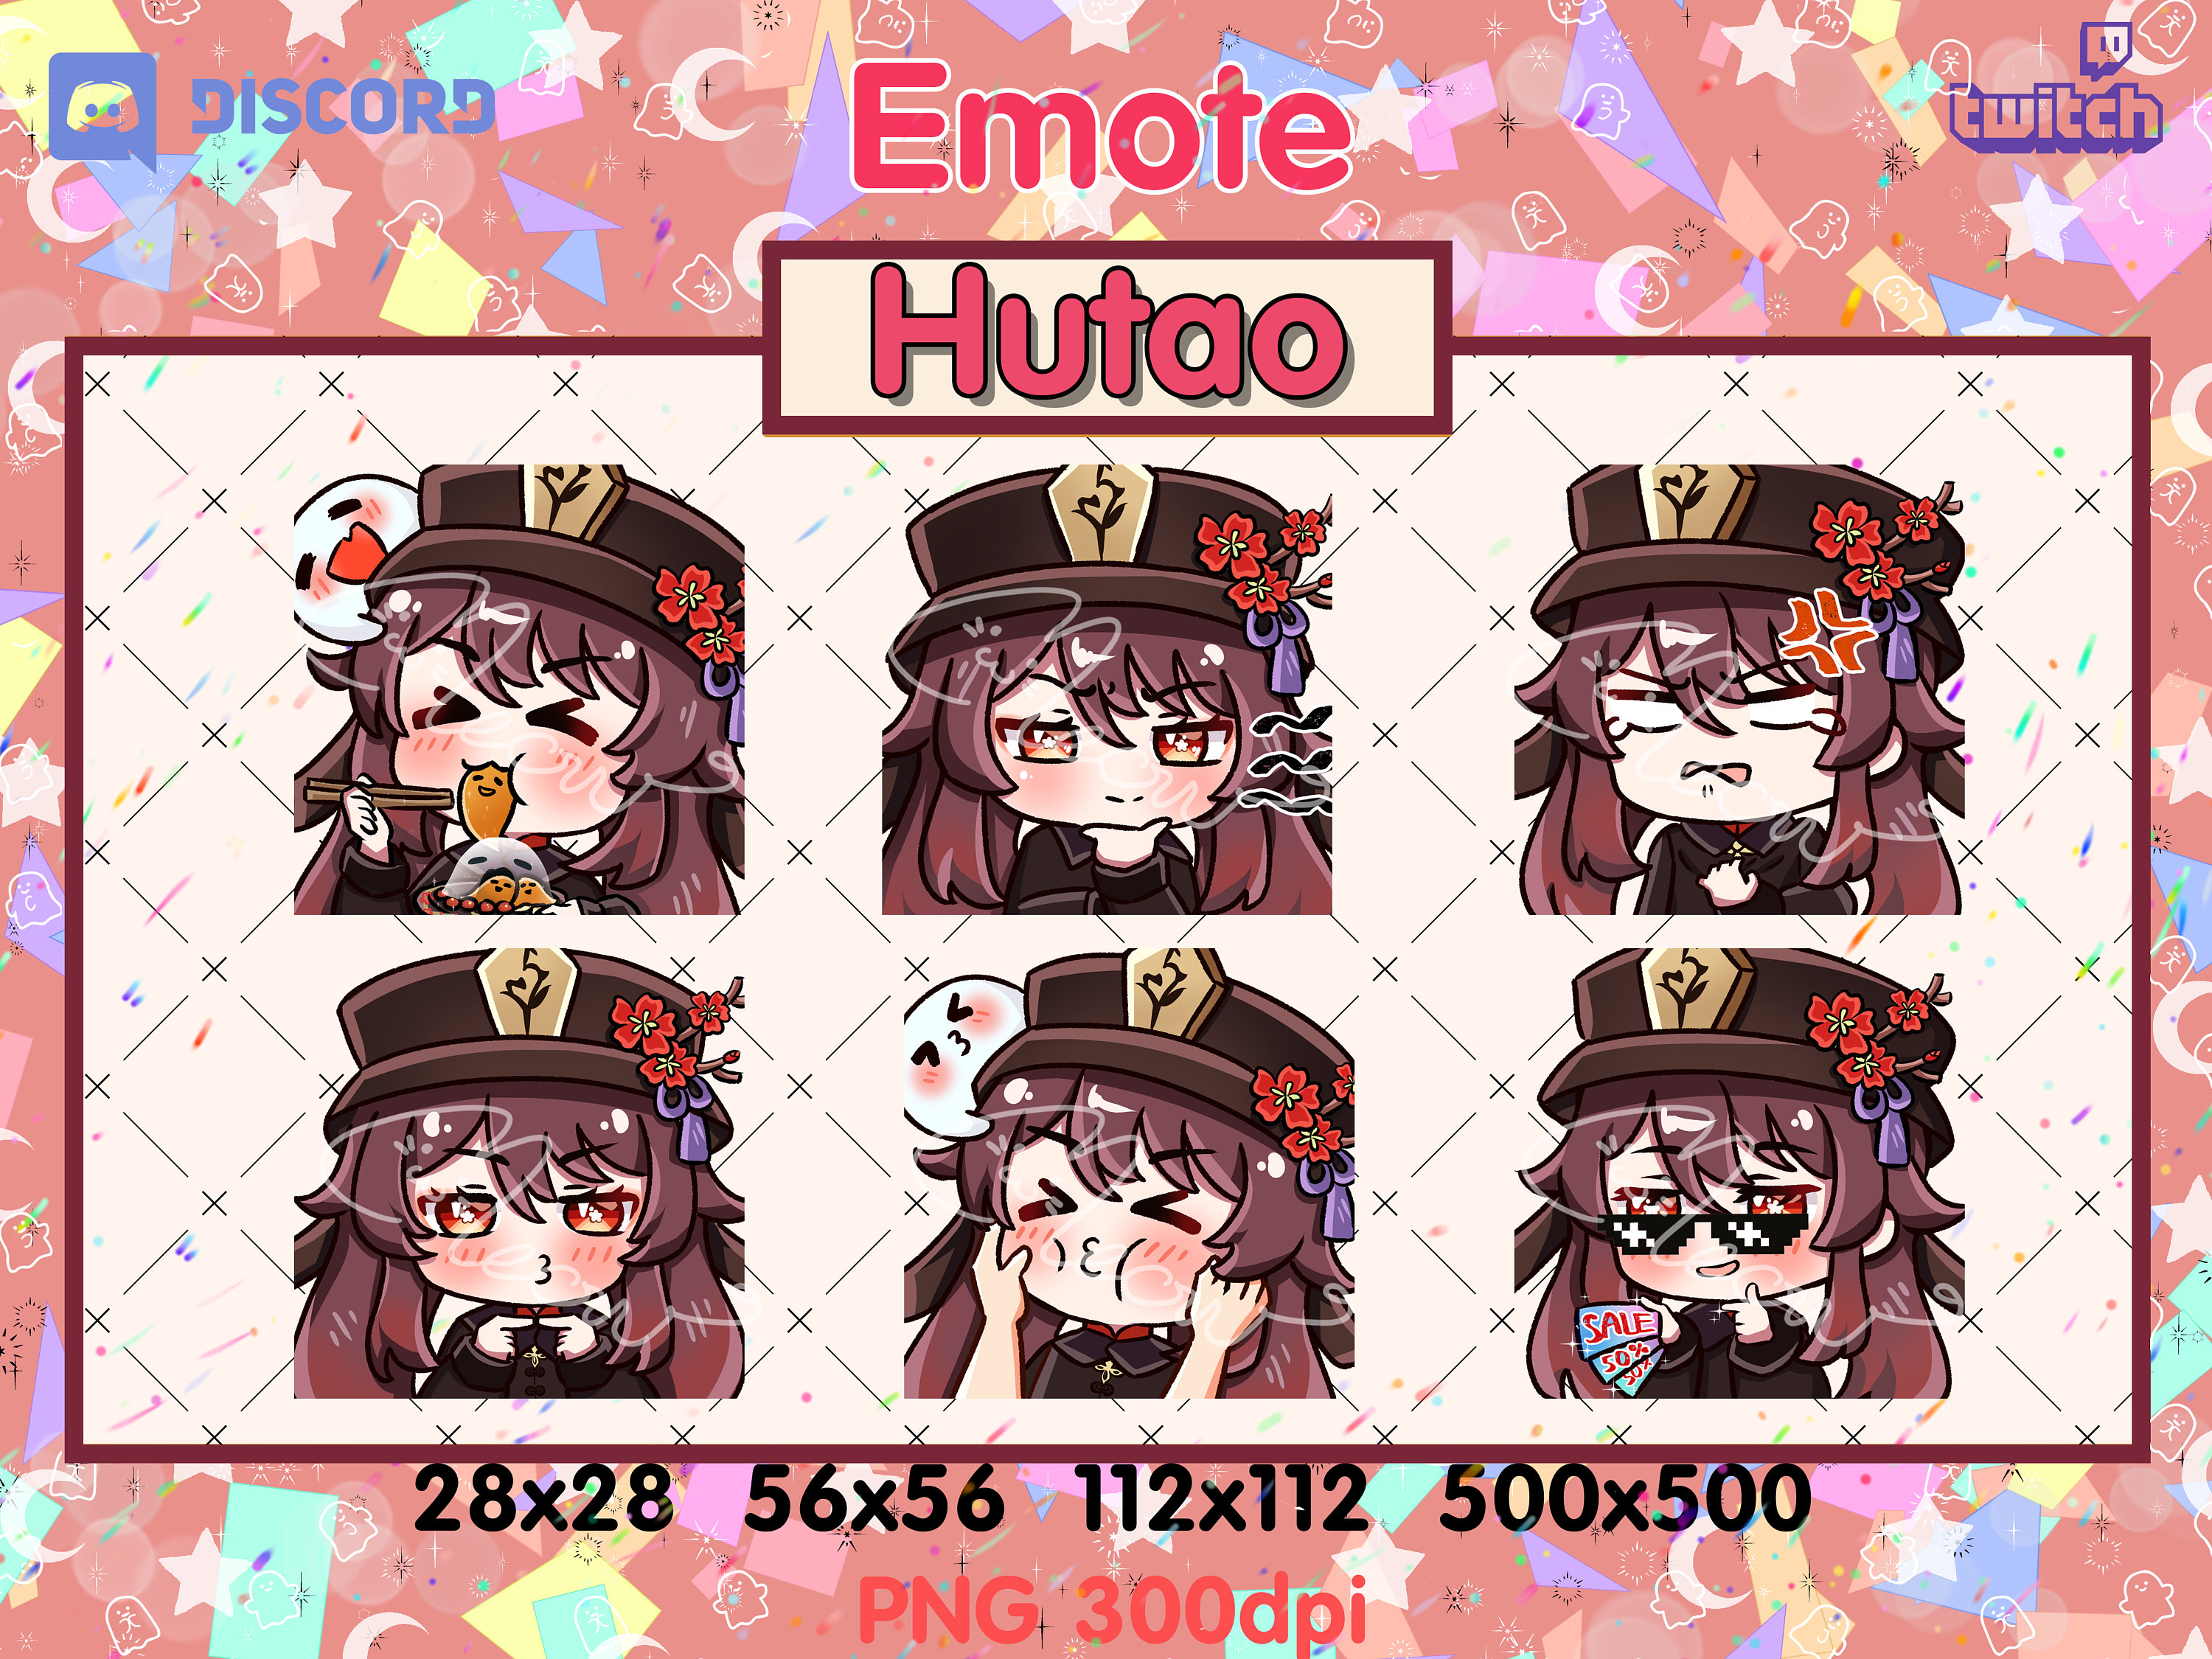 Hutao Discord Emojis